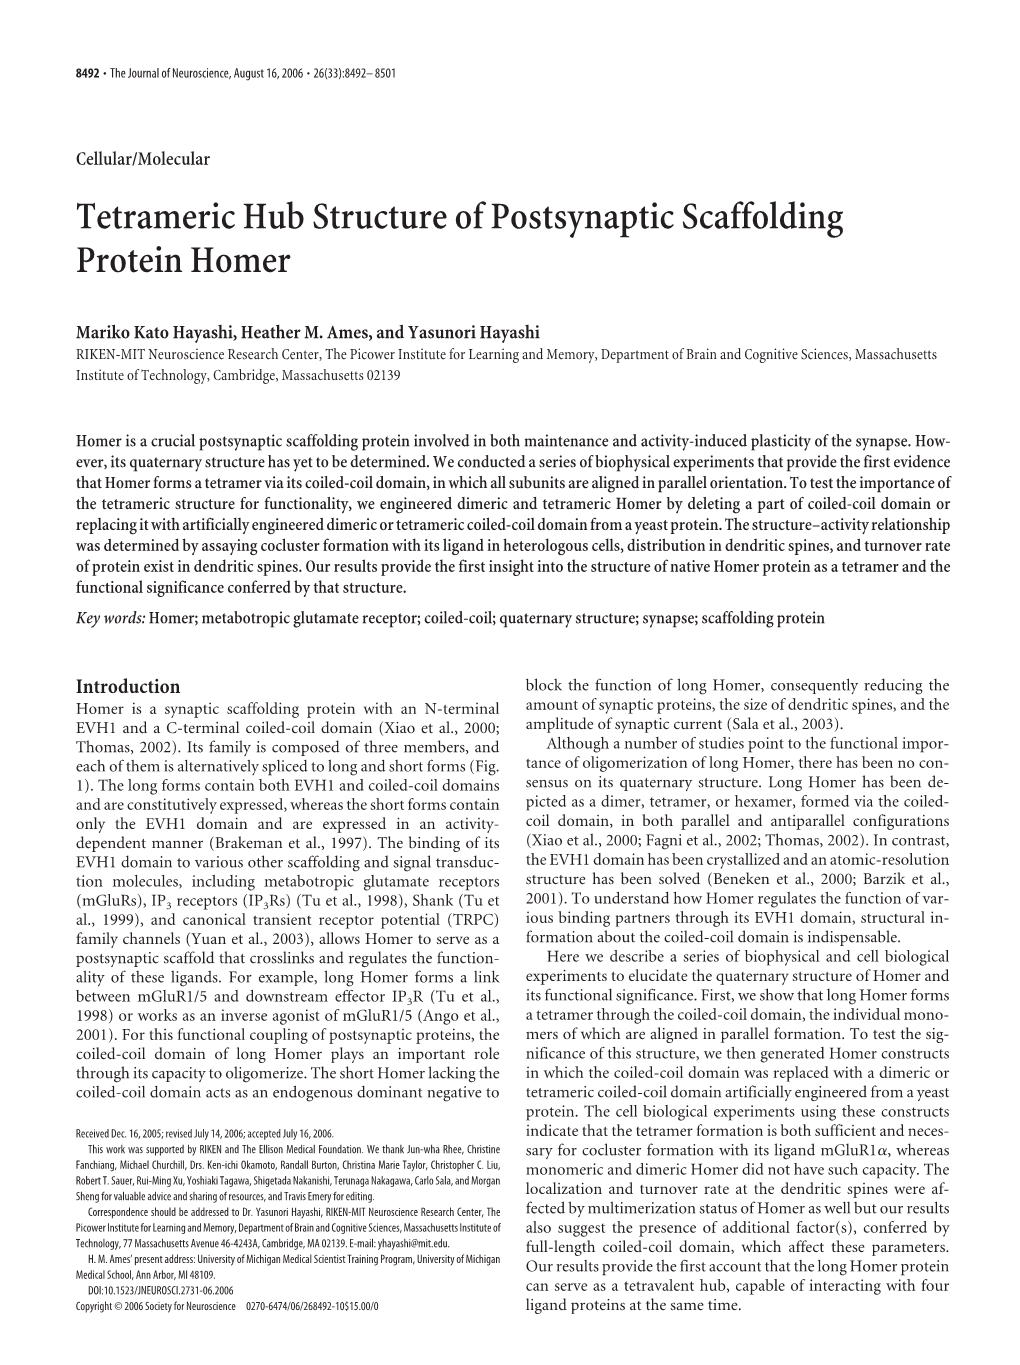 Tetrameric Hub Structure of Postsynaptic Scaffolding Protein Homer